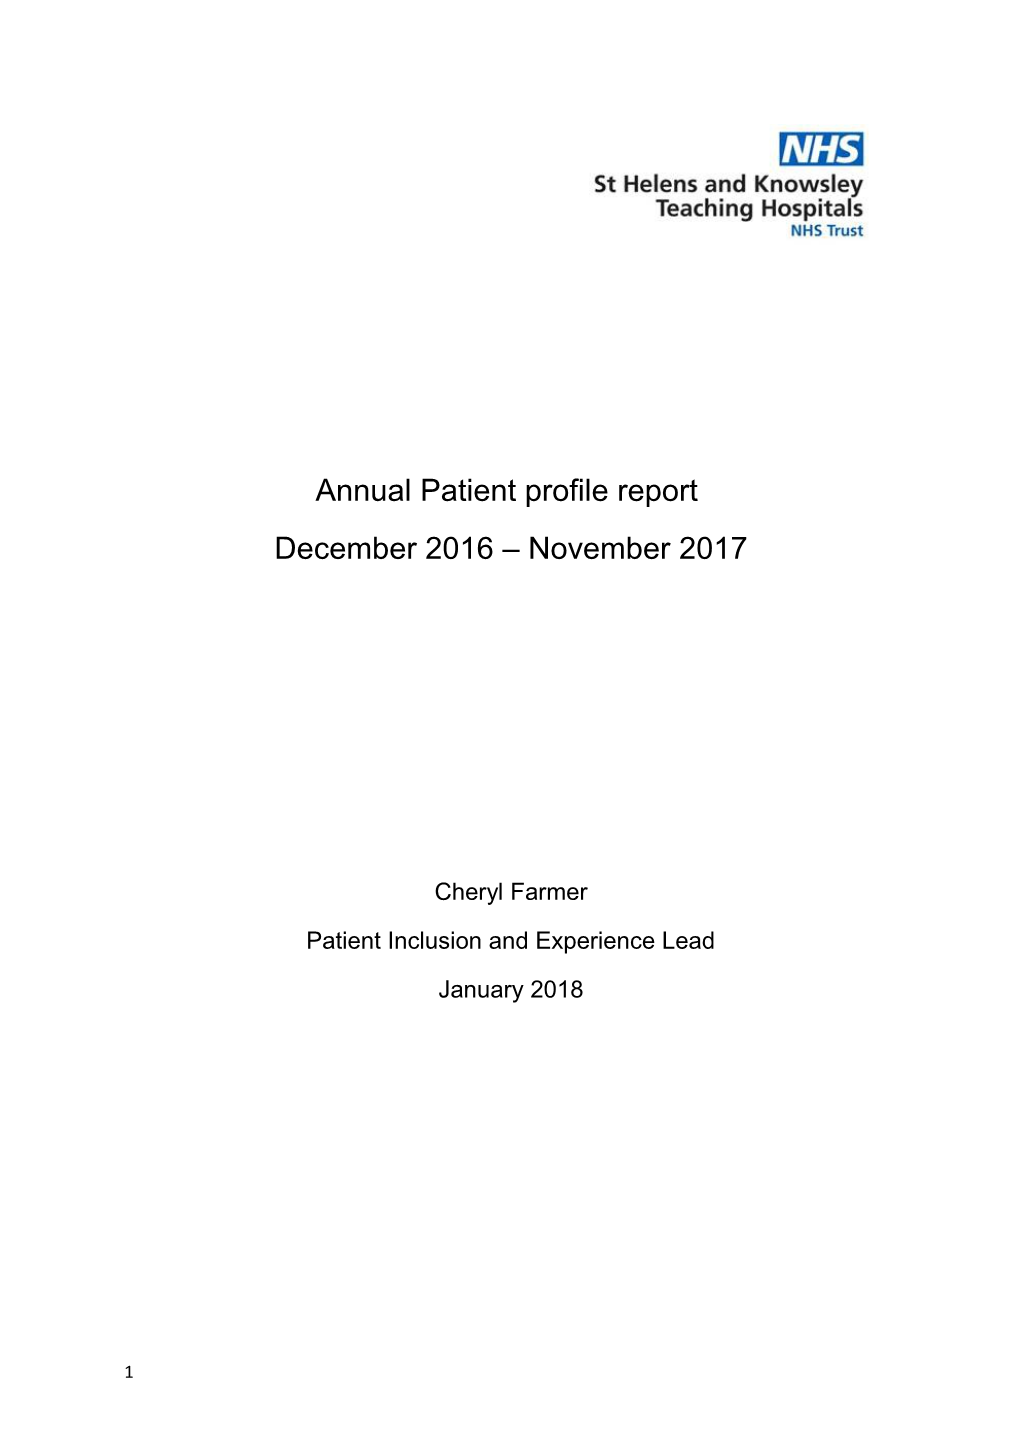 Annual Patient Profile Report